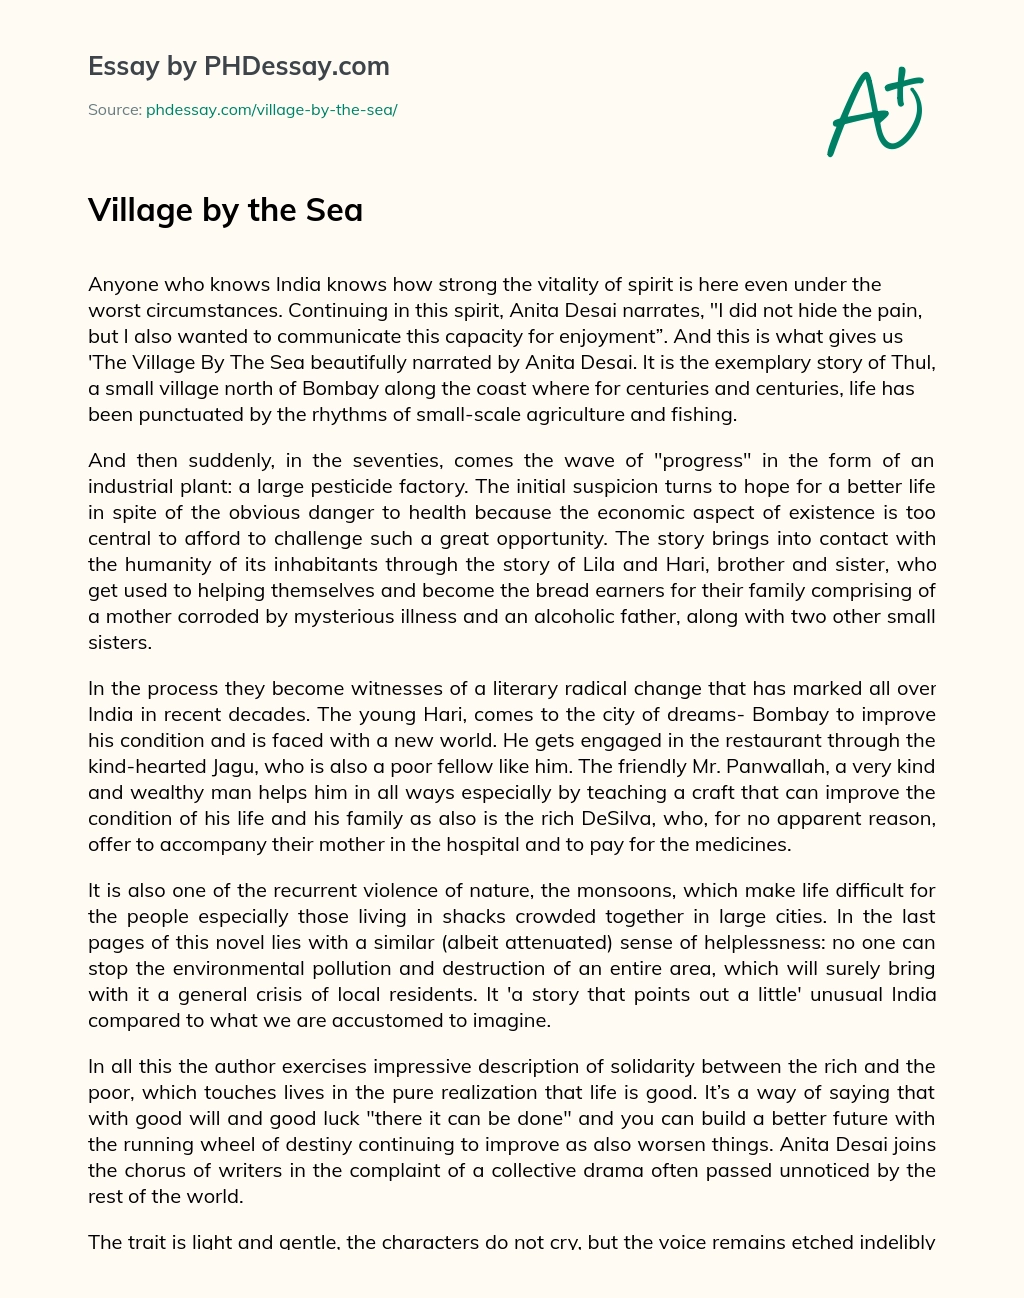 Village by the Sea essay